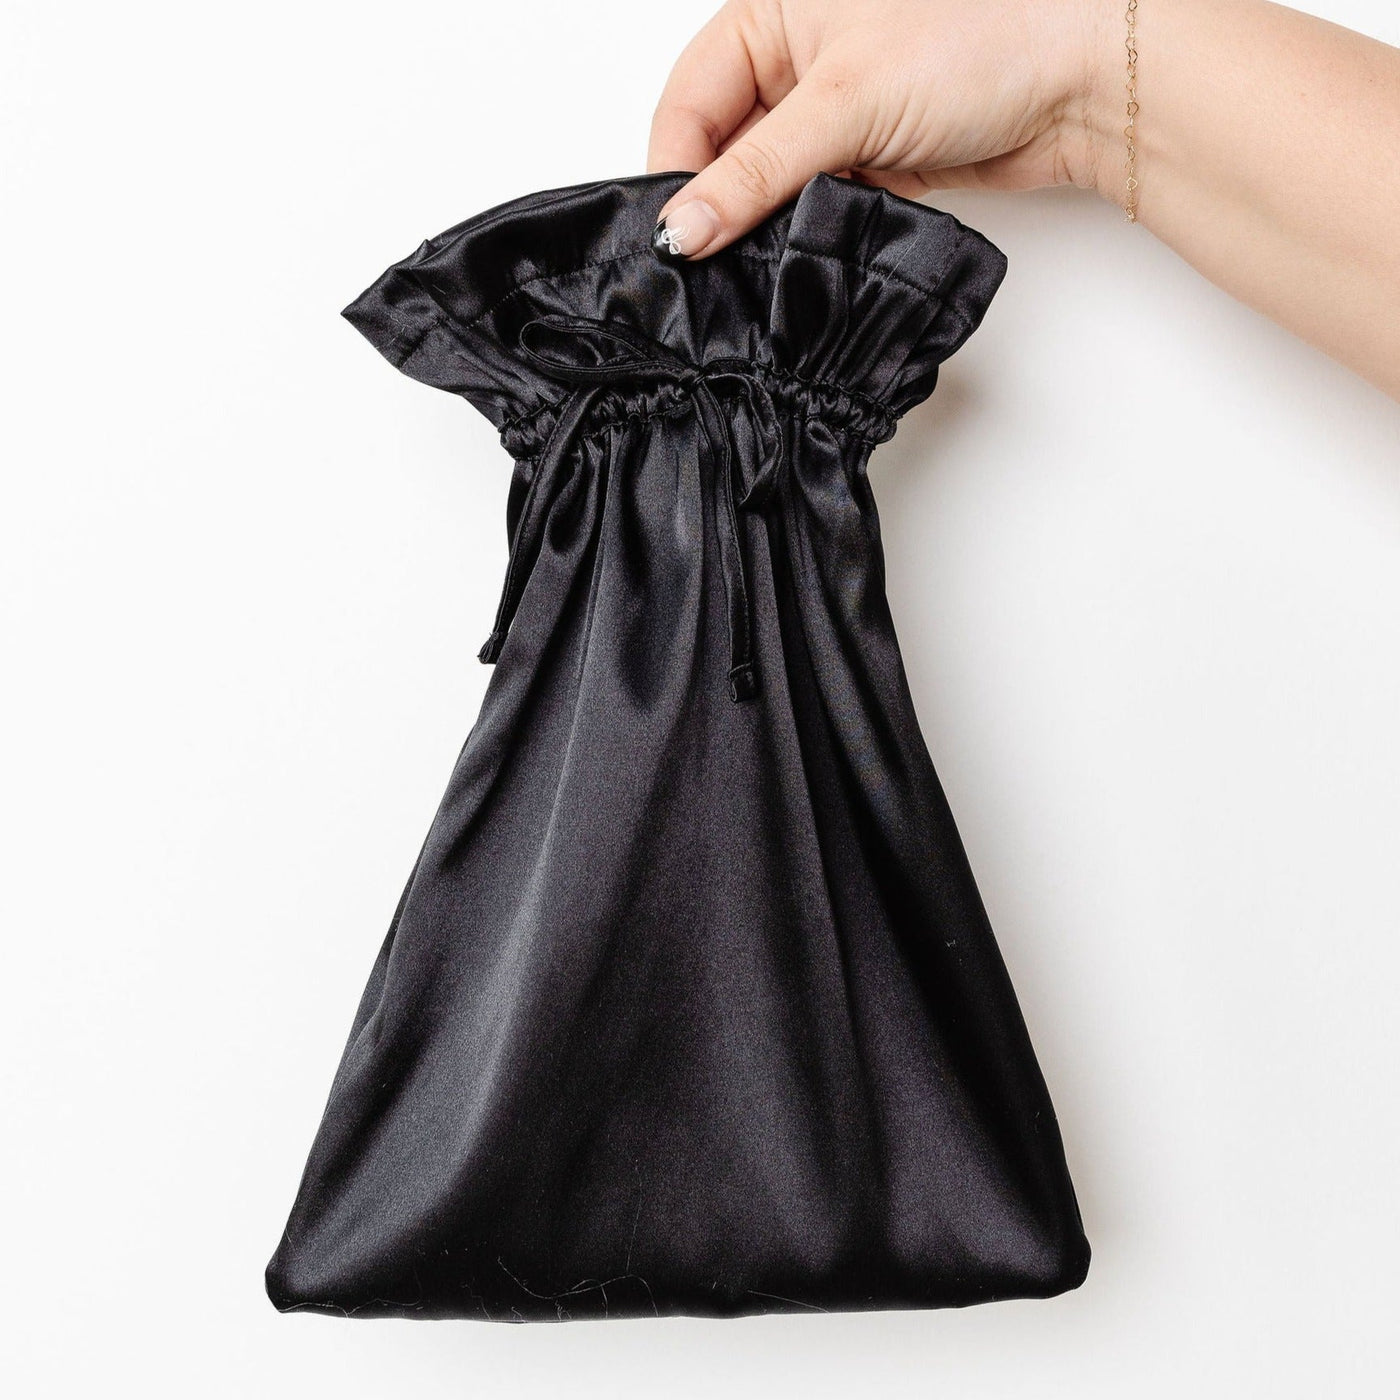 Satin Lingerie Bag - Black - Mentionables